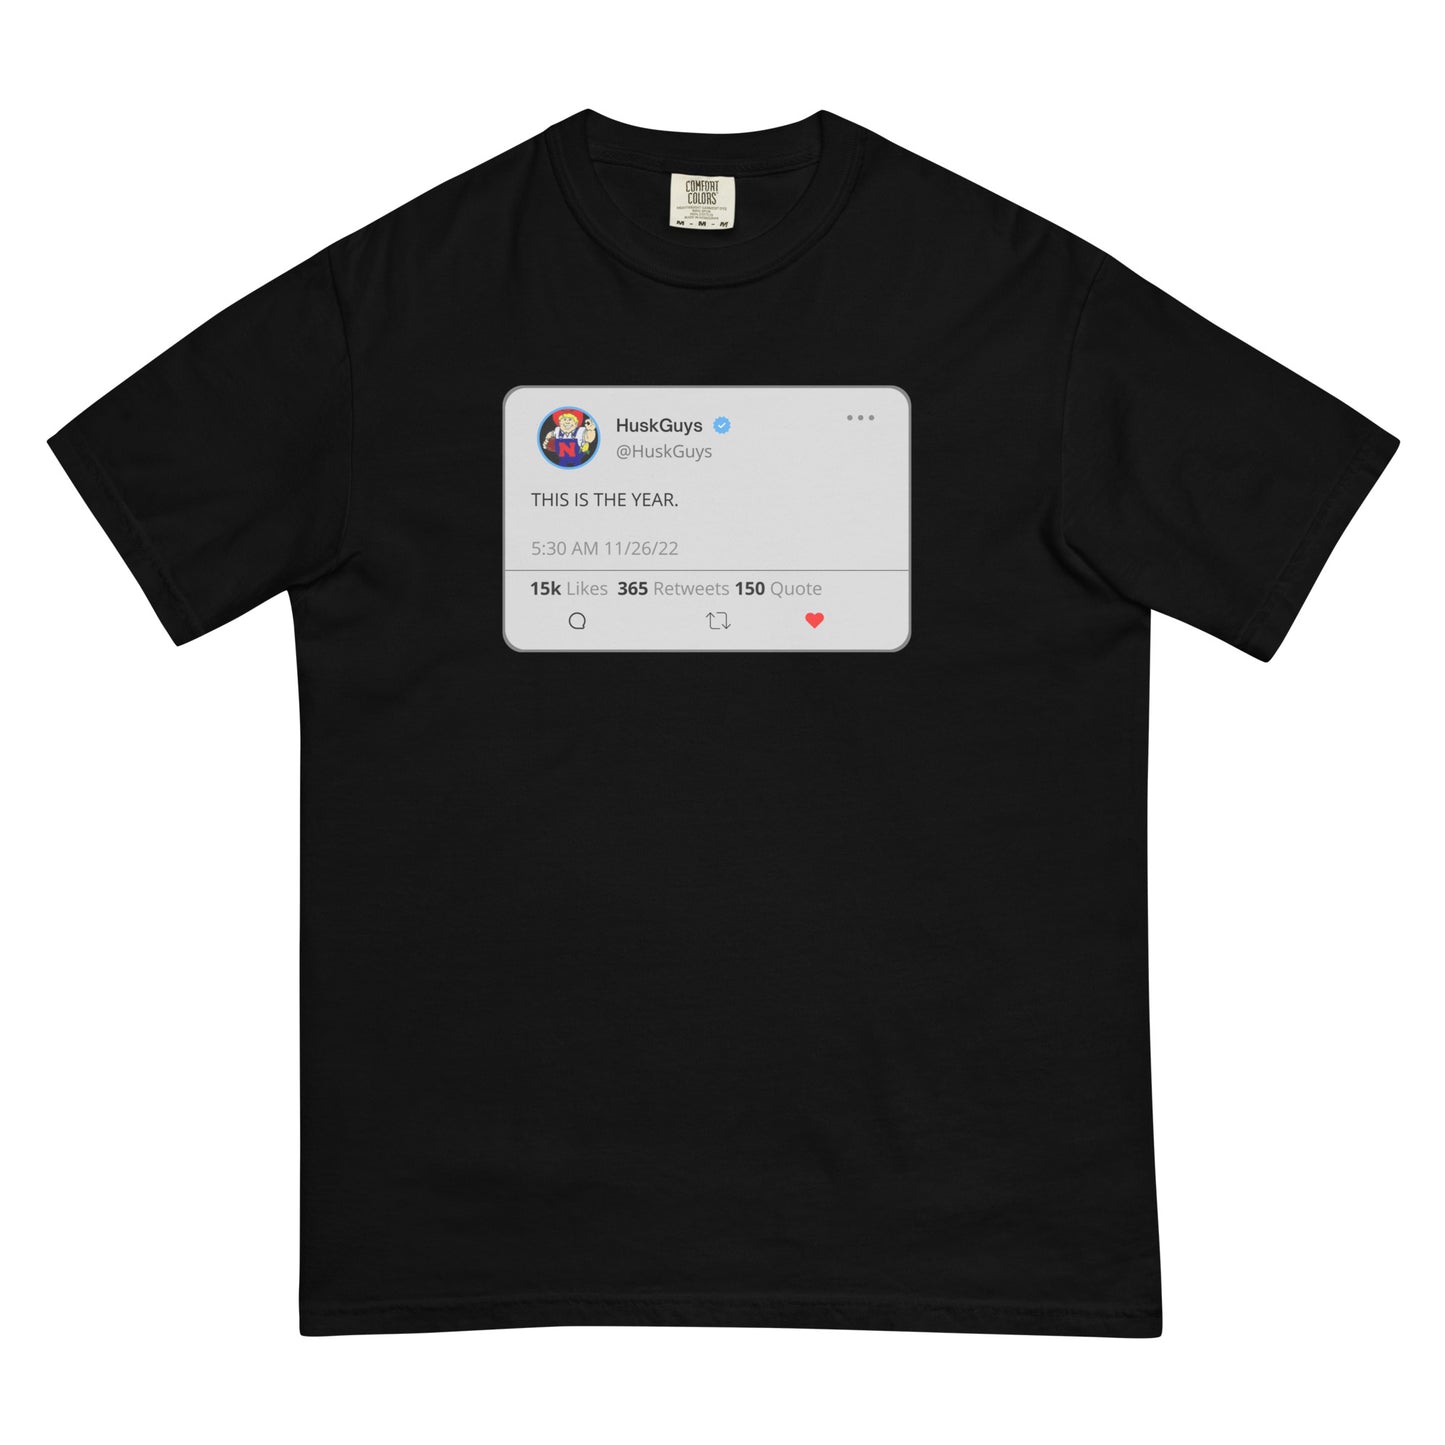 HuskGuys Tweet T-shirt